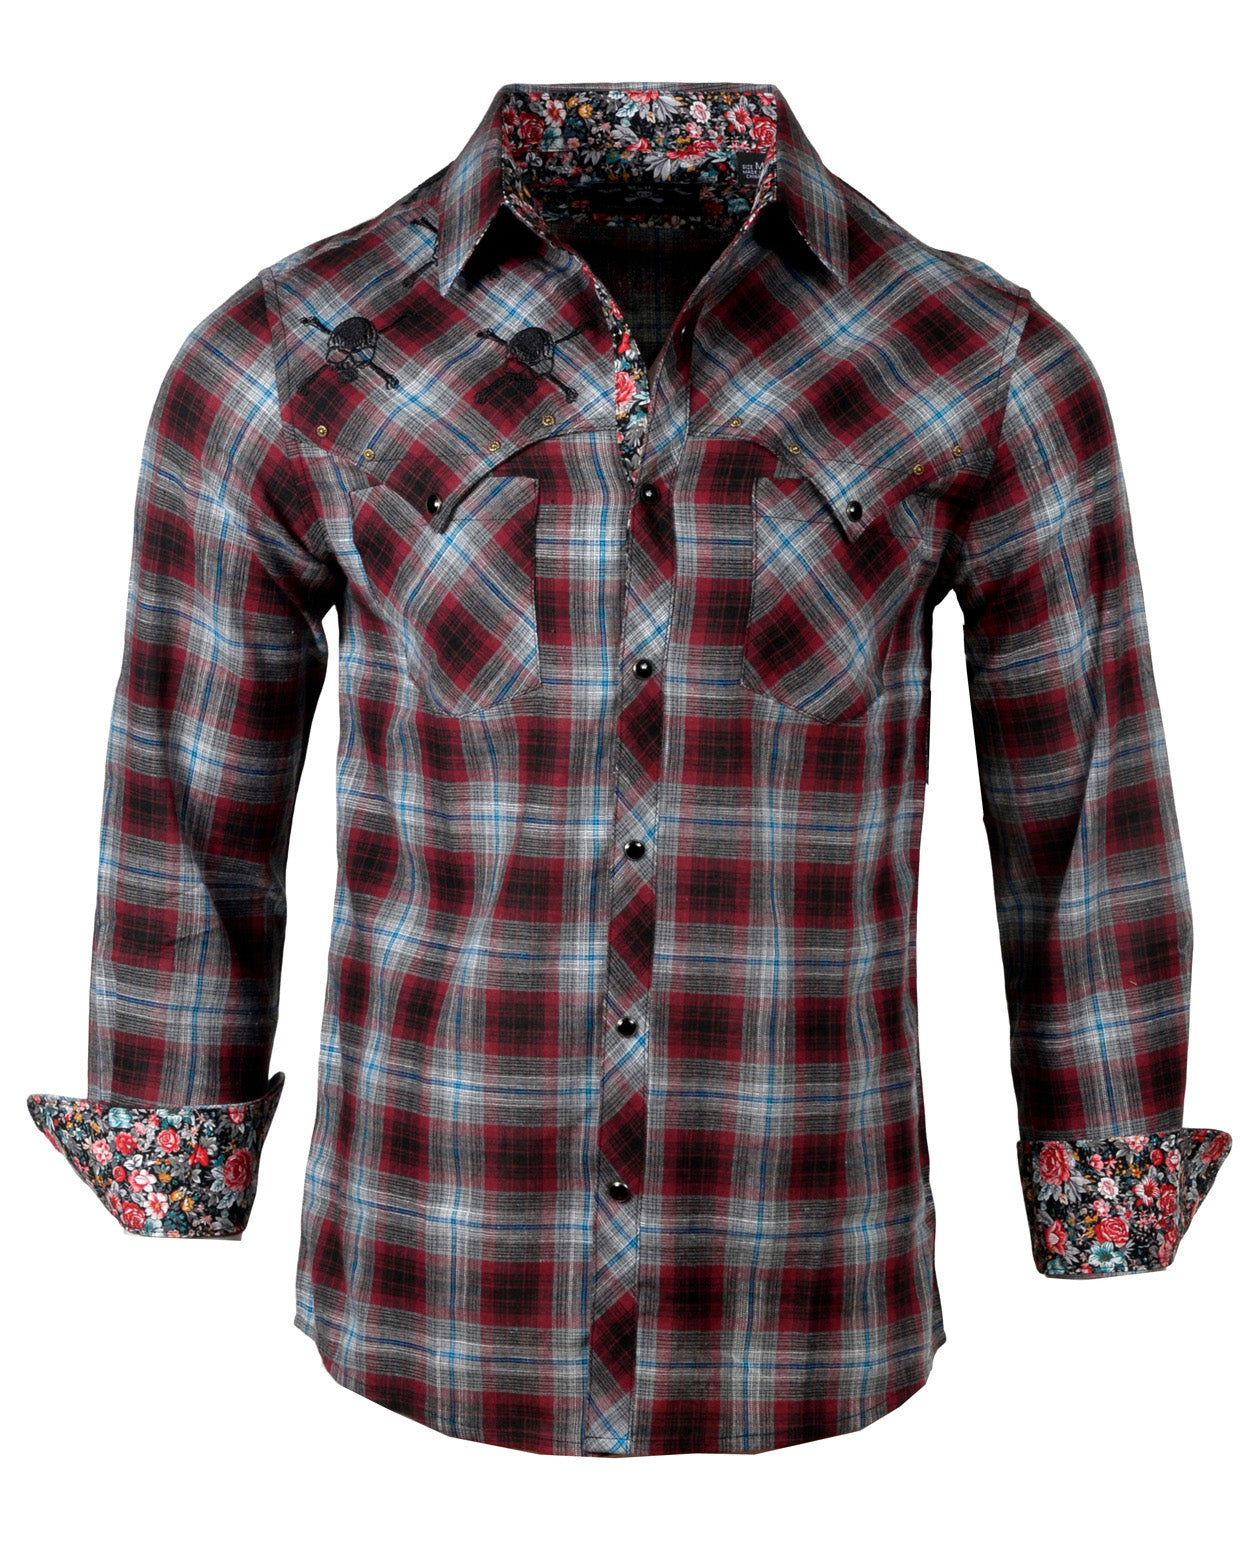 Men's Casual Fashion Button Up Shirt - Free Fallin' by Rock Roll n Soul